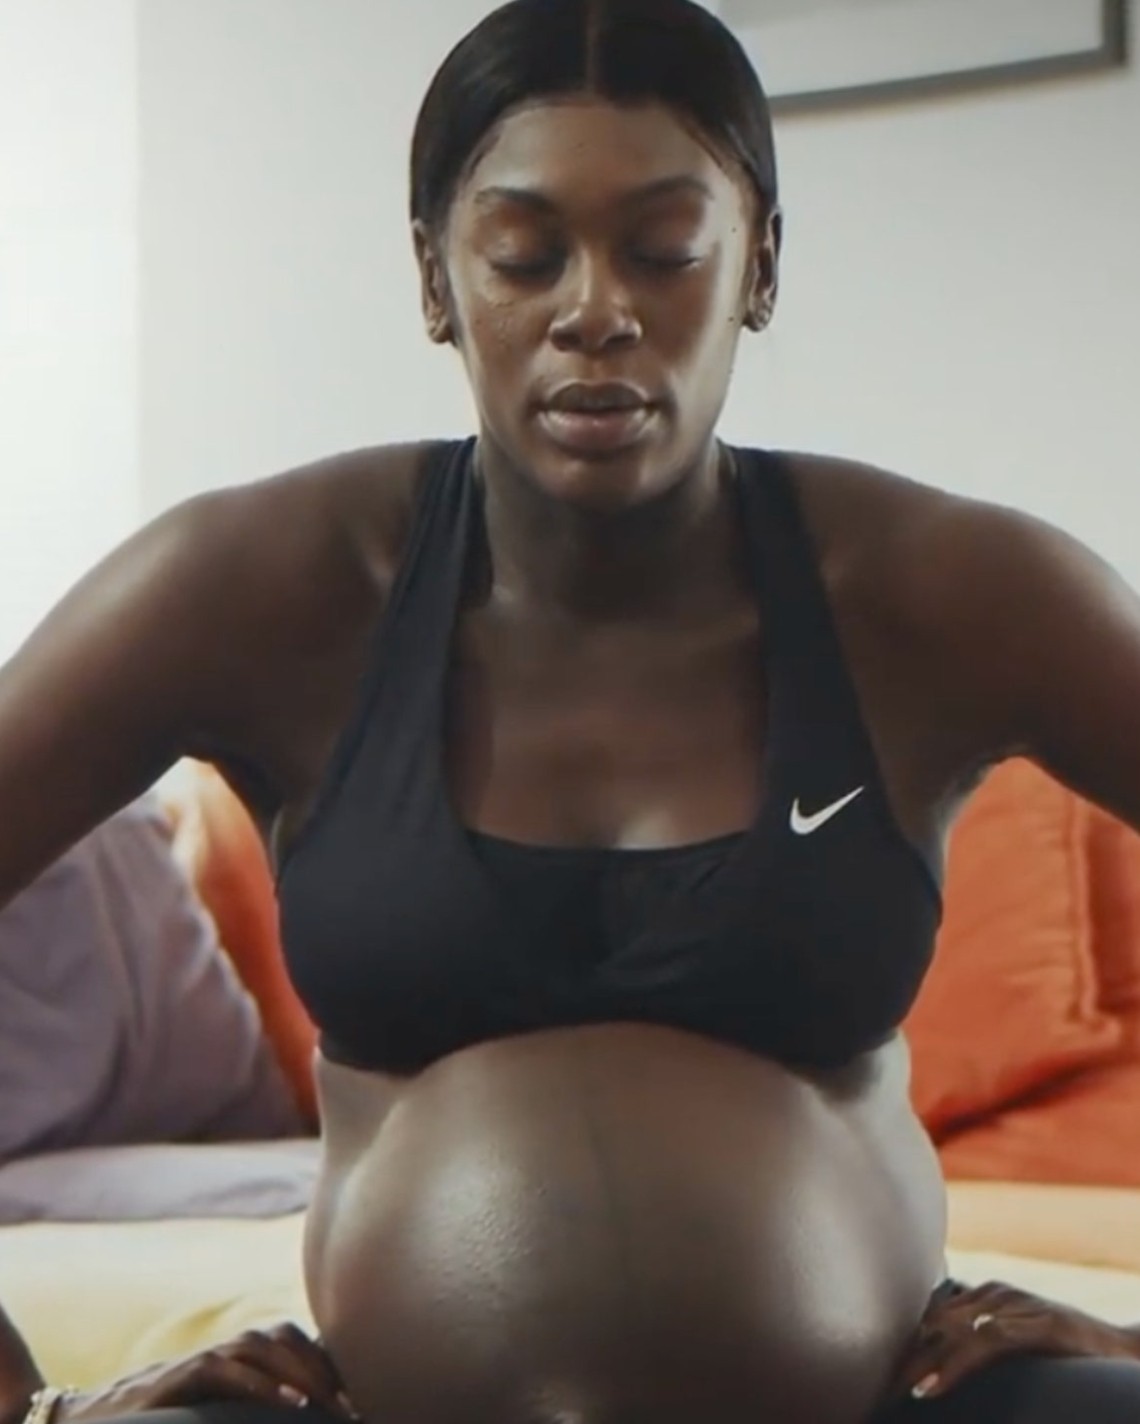 Toughest Athletes: Με μία ταινία μικρού μήκους, η Nike εξυμνεί τη δύναμη της μητέρας